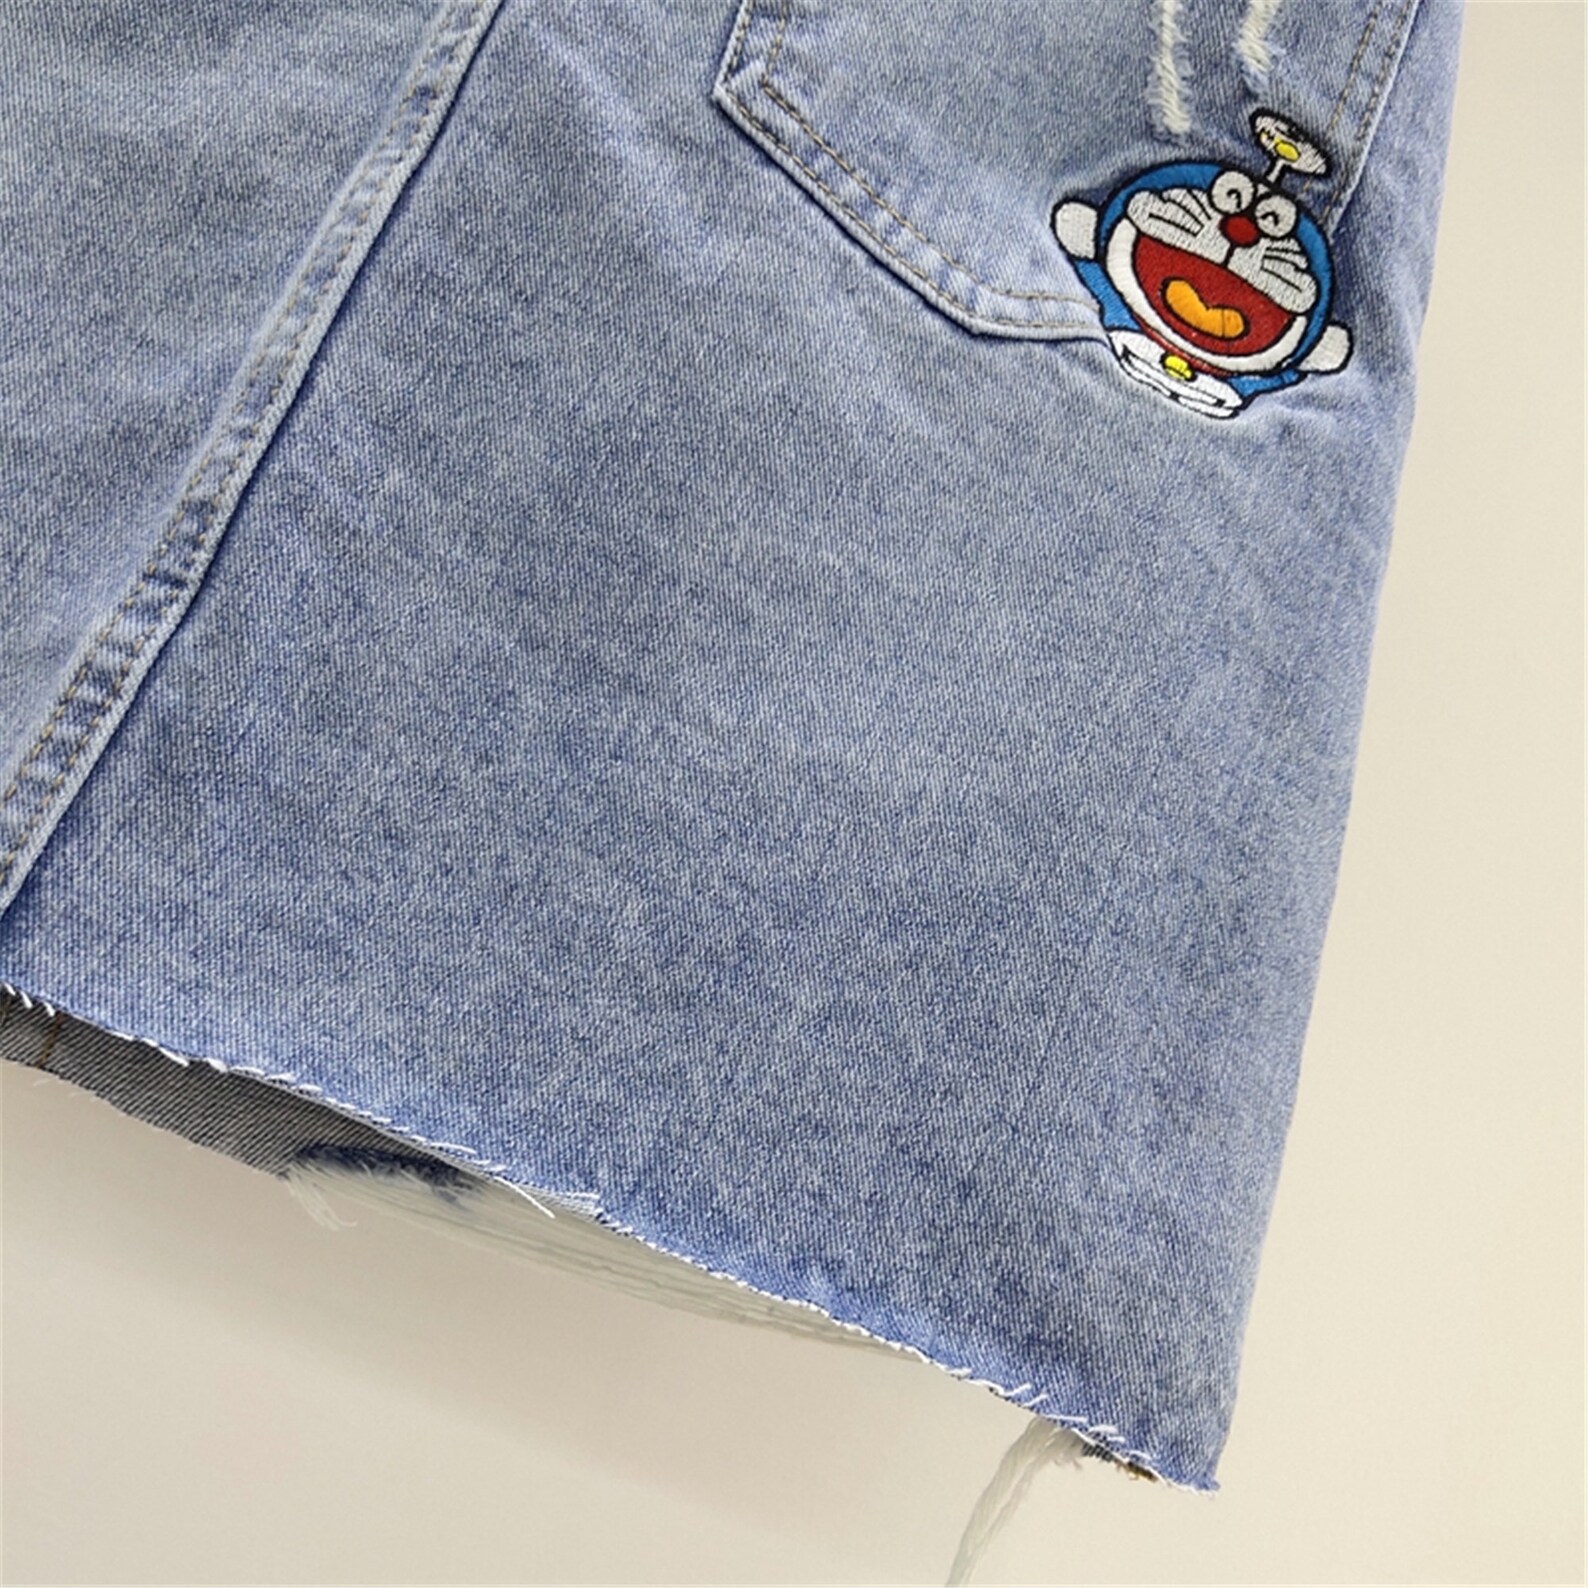 Denim Skirt Fashion All-match Doraemon Embroidered High Waist | Etsy